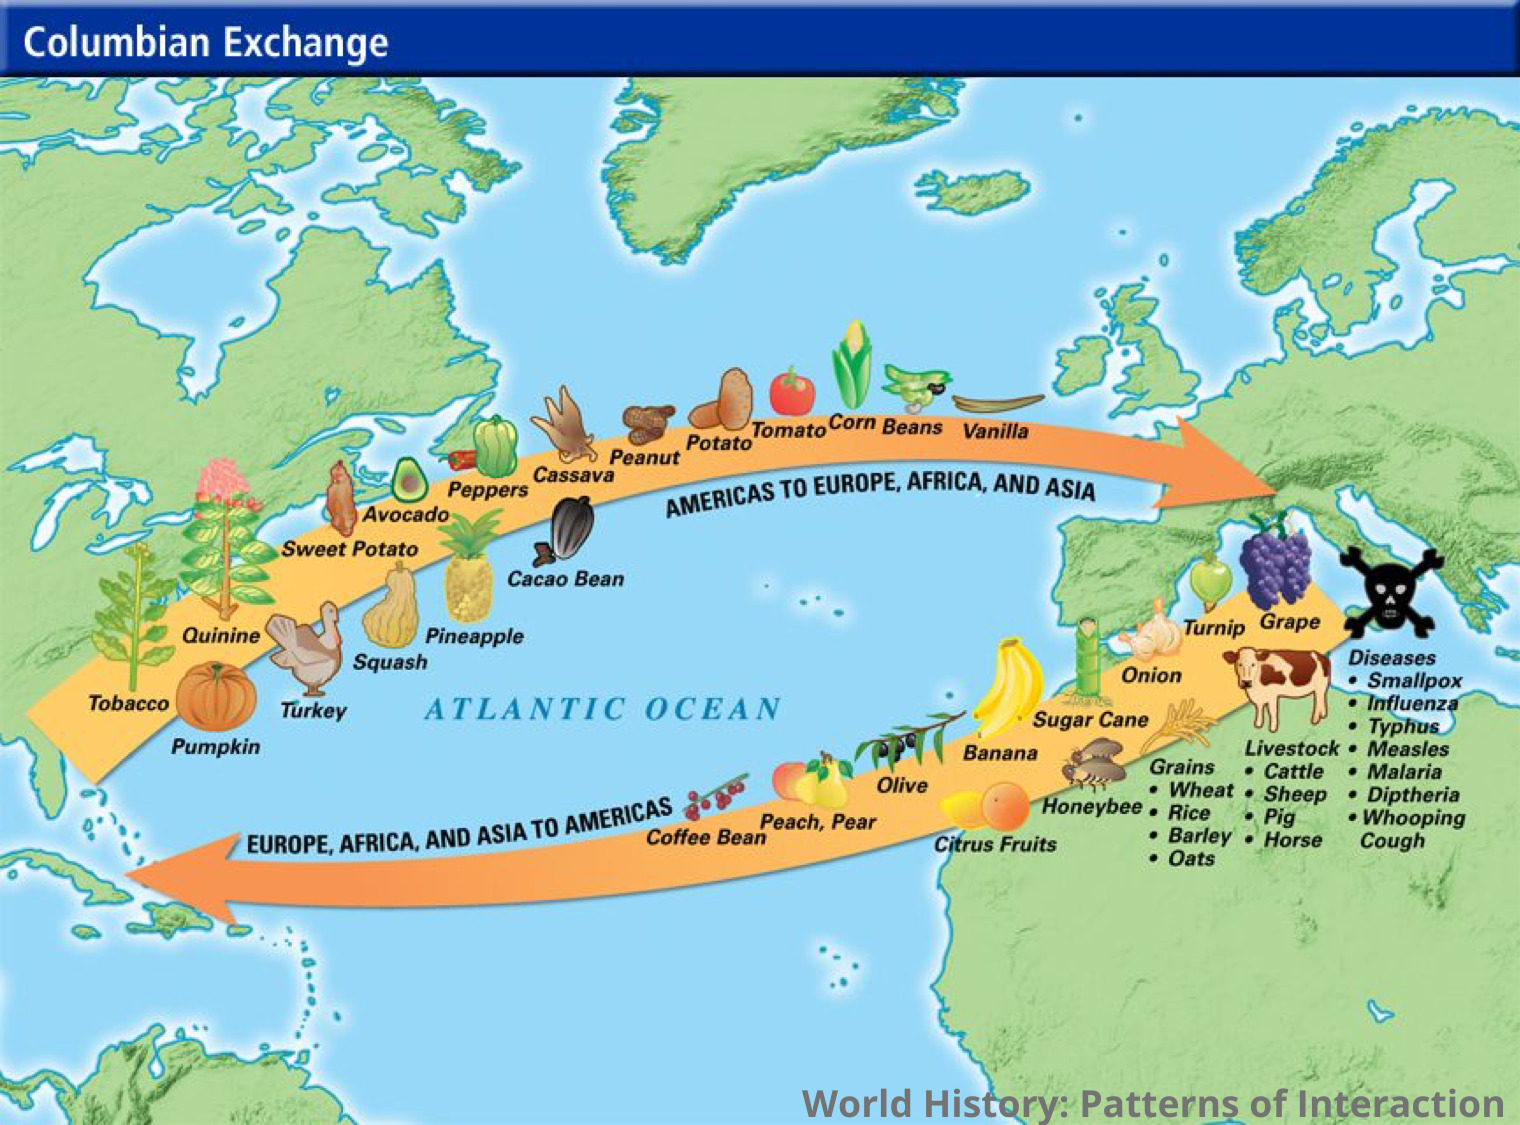 Map representing the Columbian Exchange across the Atlantic Ocean